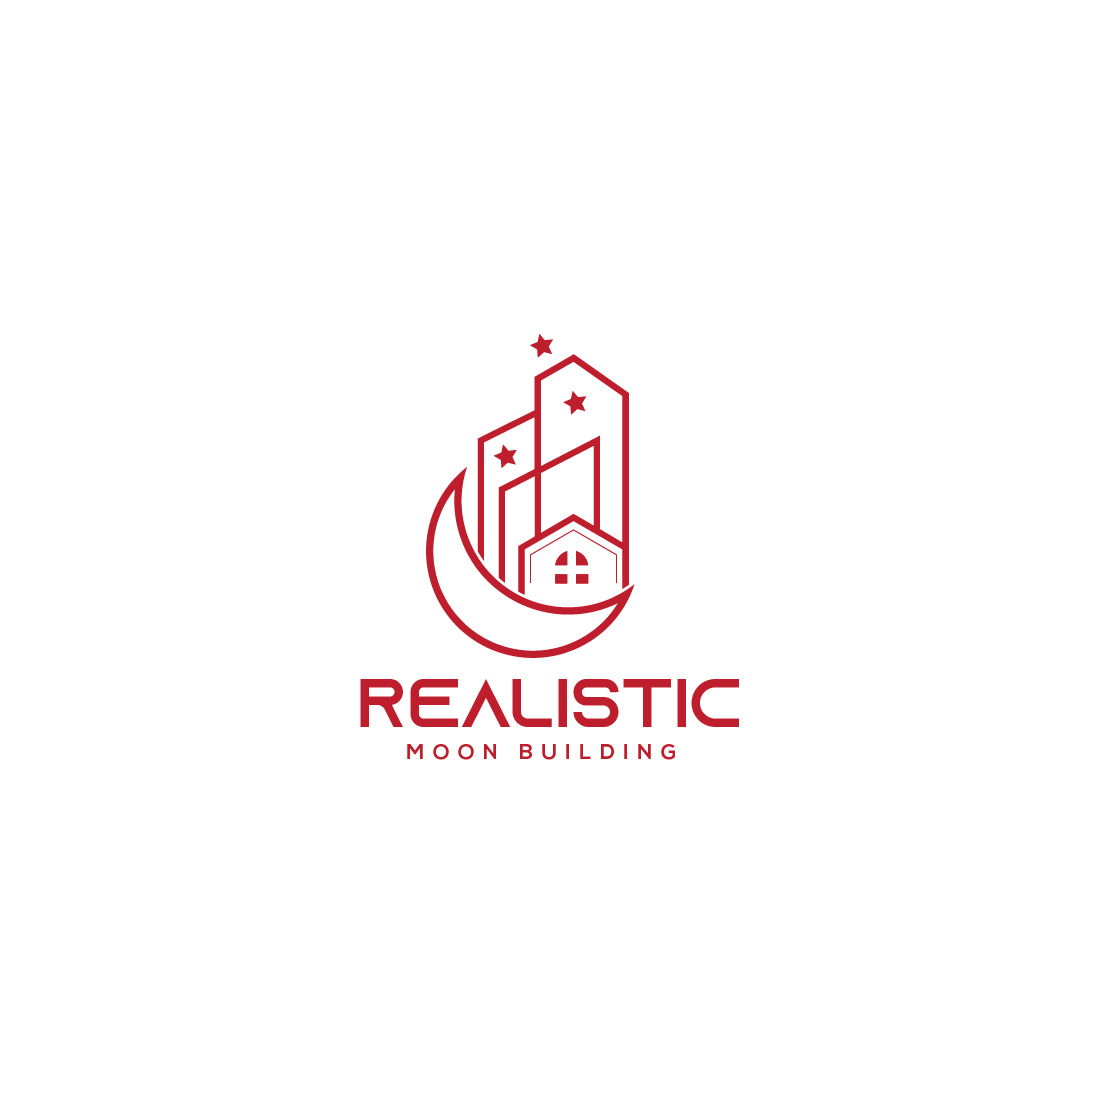 Professional Real Estate Logo Design cover image.